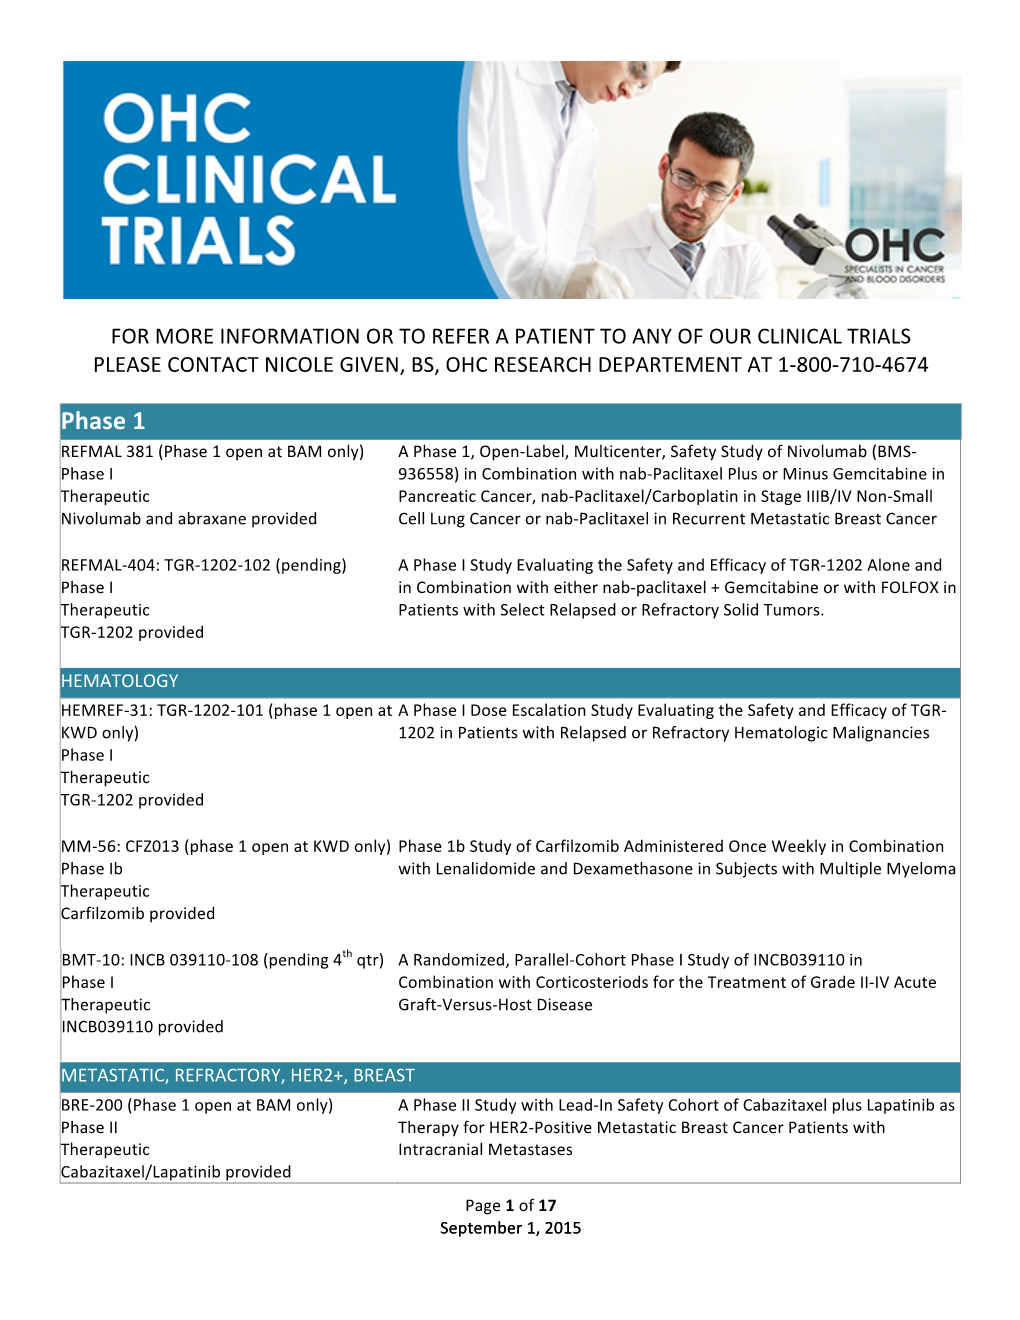 OHC Clinical Trials List V4